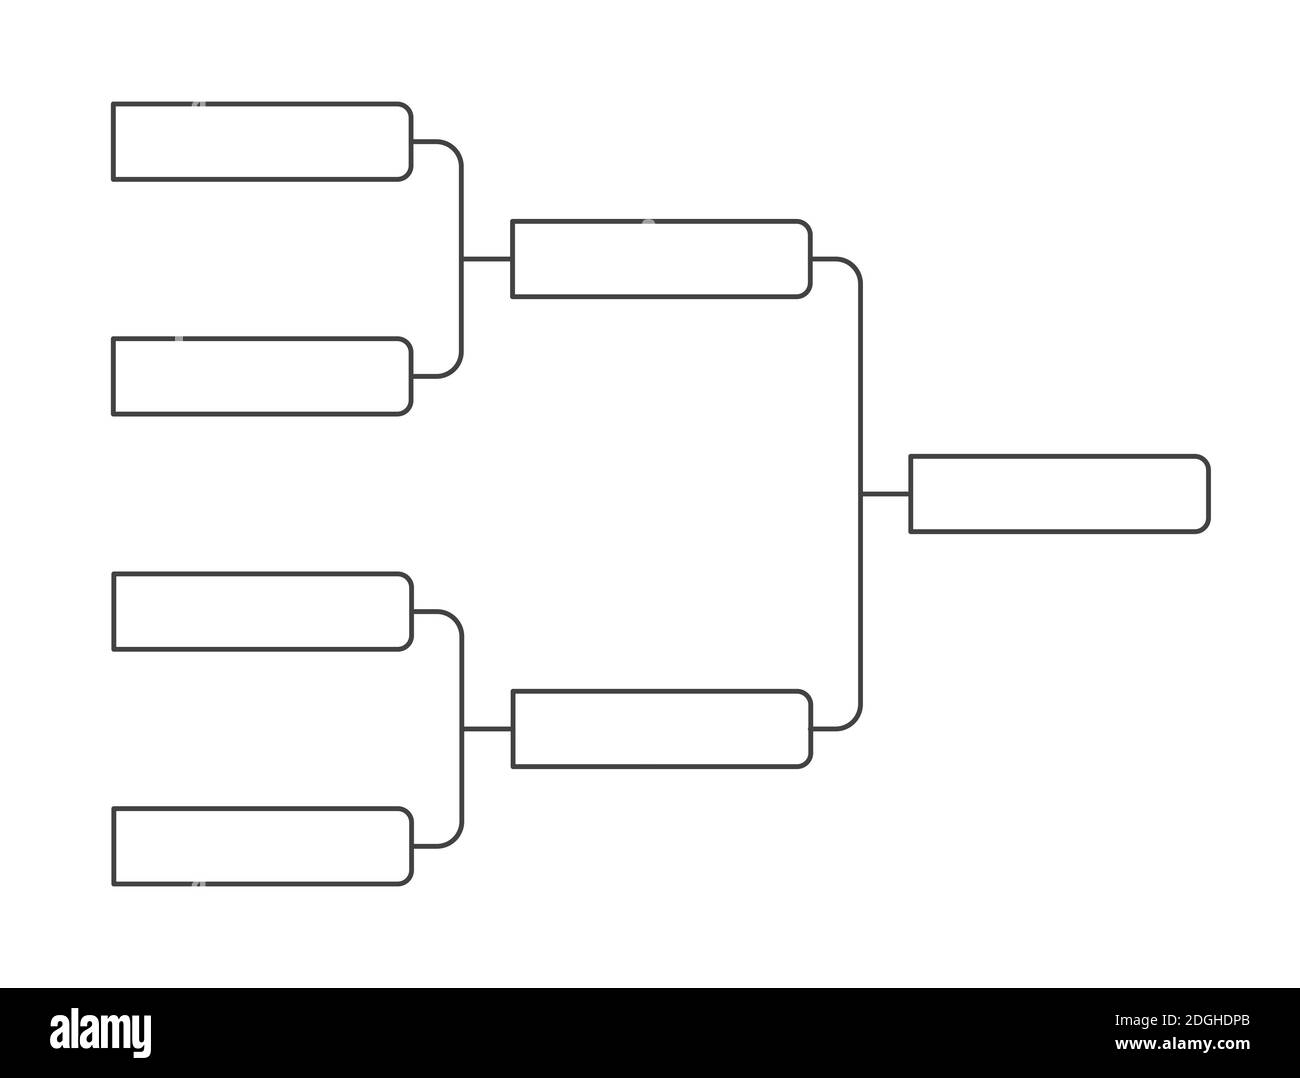 4 team tournament bracket championship template flat style design